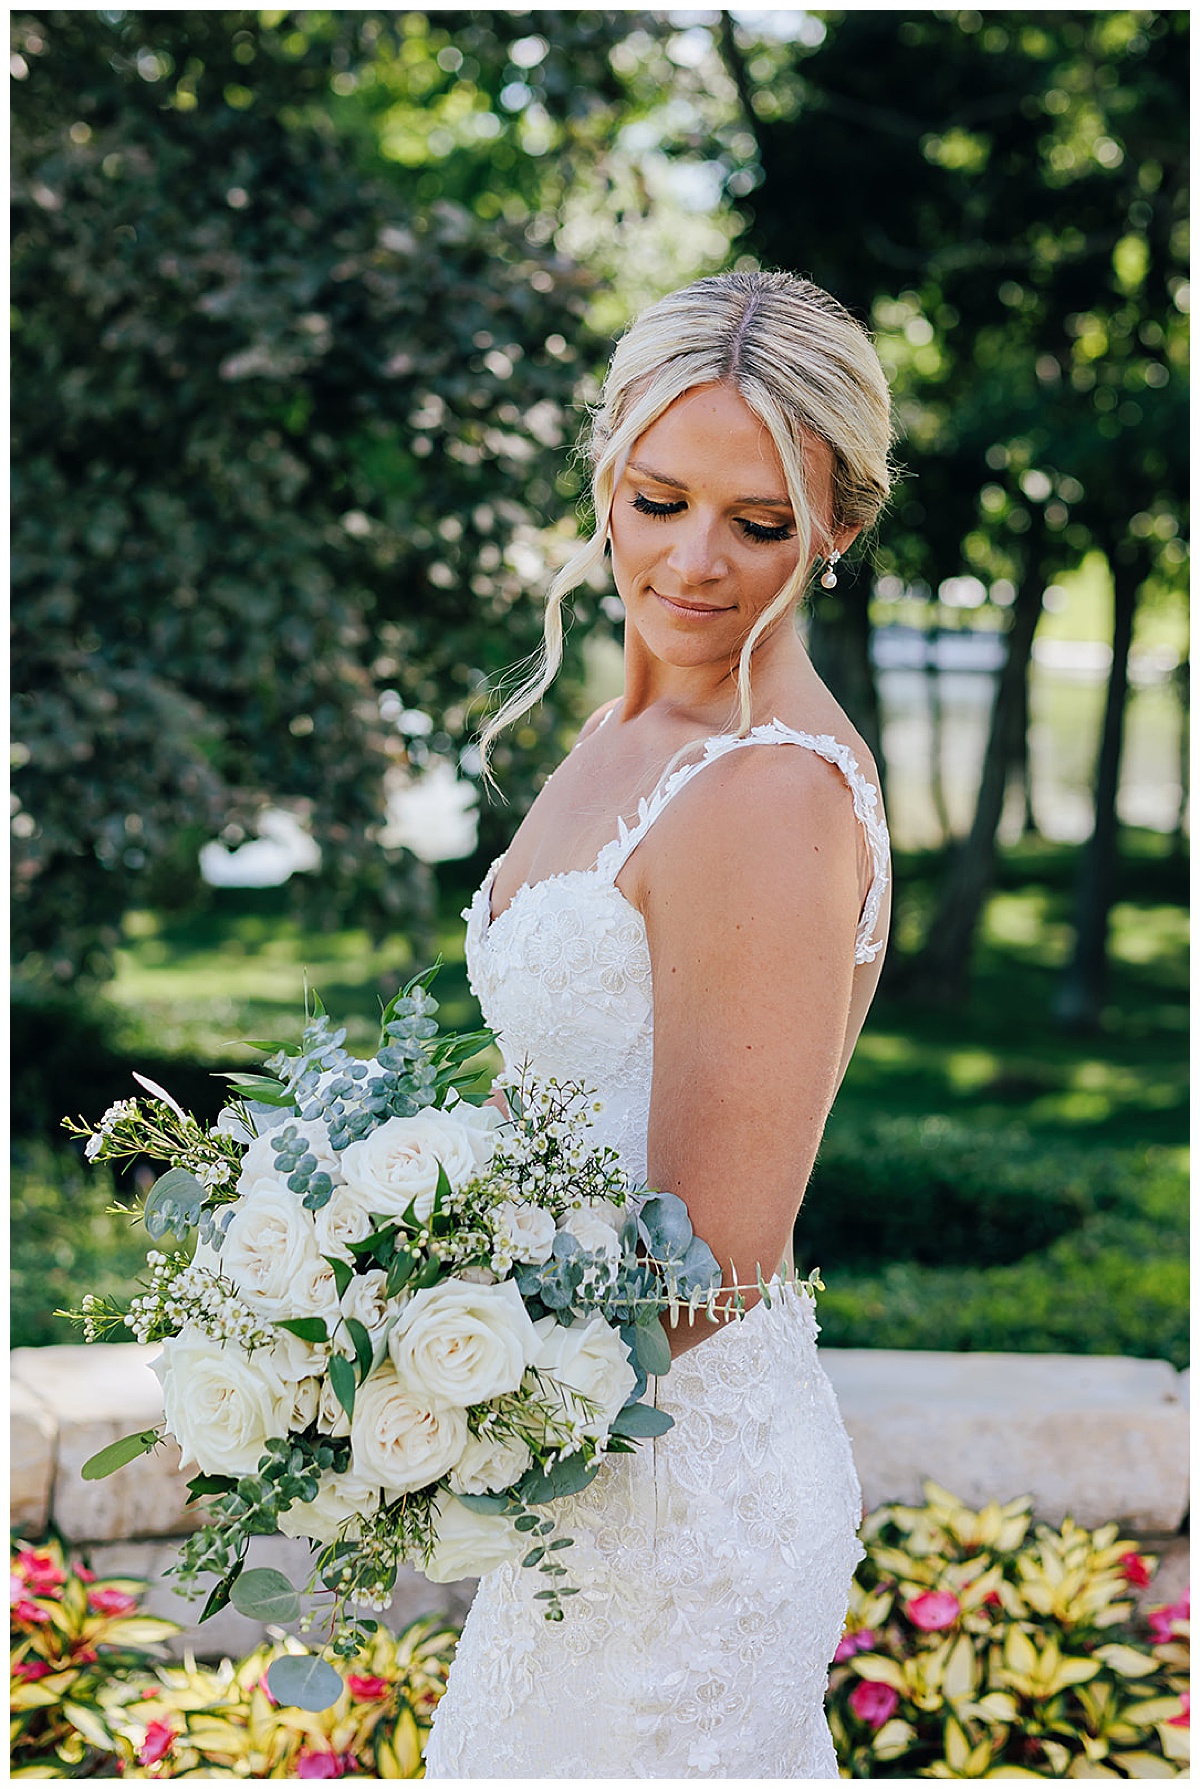 Stunning bridal bouquet by Detroit Wedding Photographer